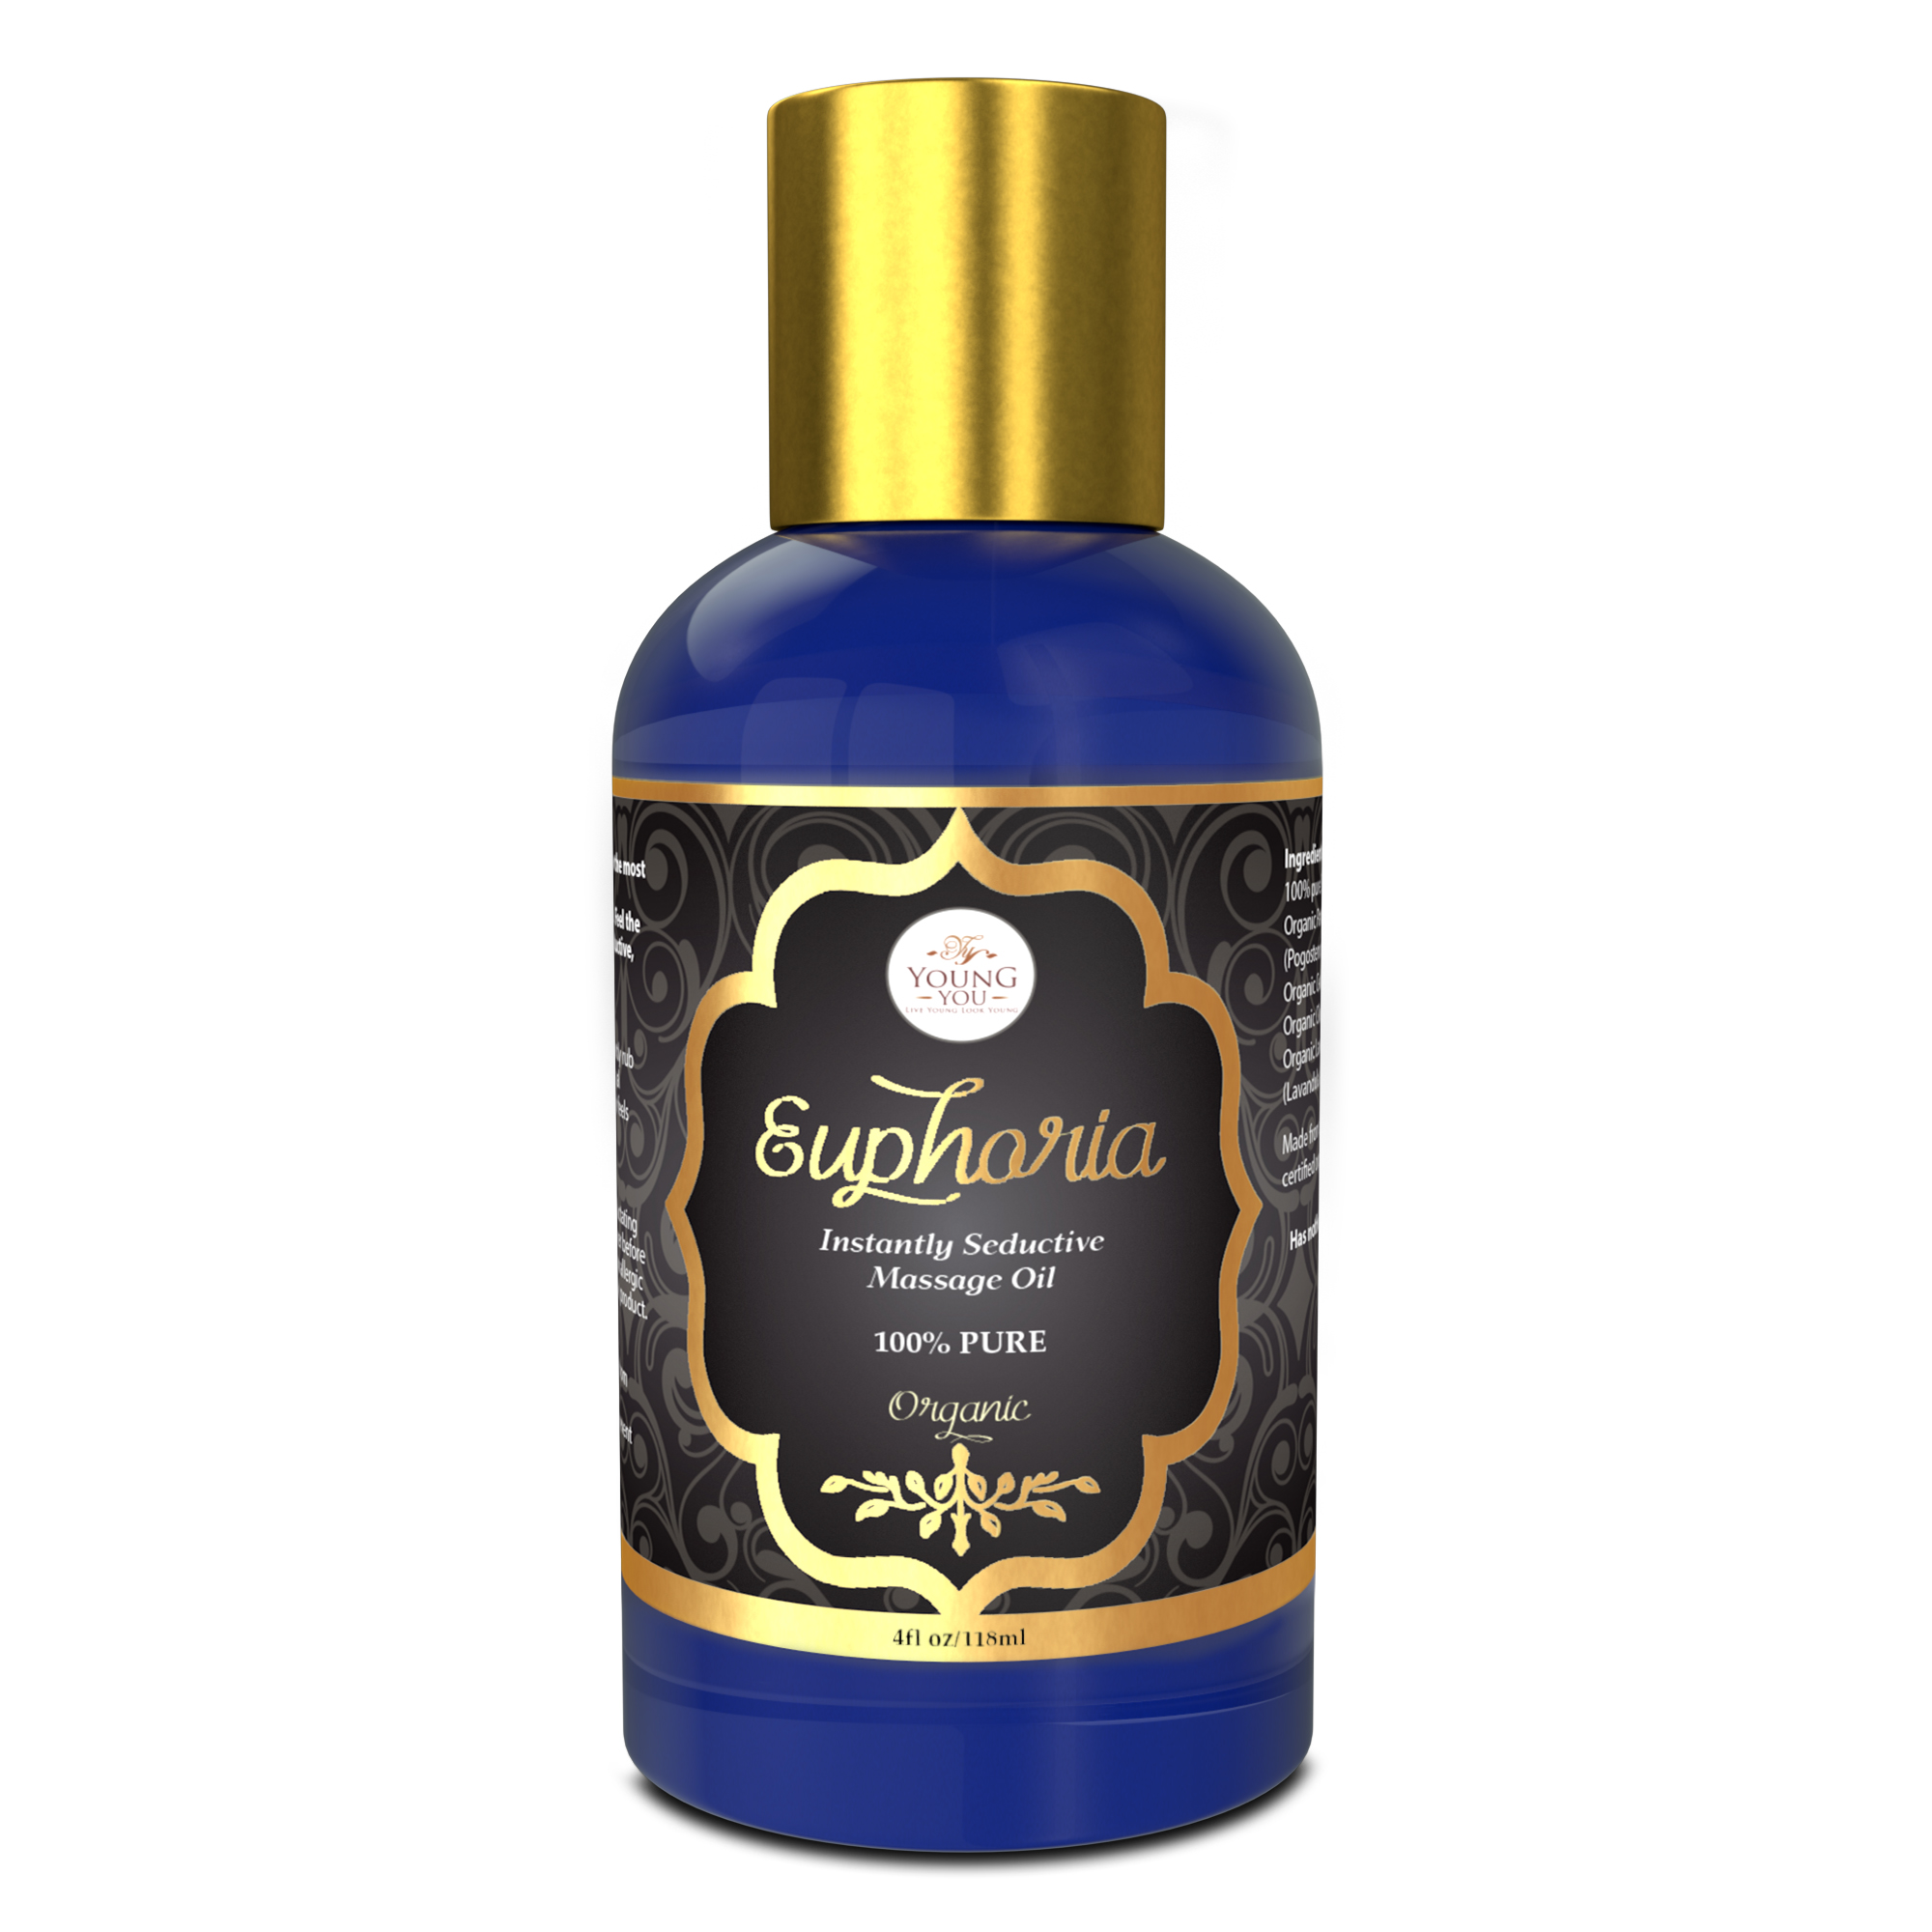 Euphoria Sensual Massage Oil - Silky Smooth Lubricant Sex Oil for Warming Sensual Massage